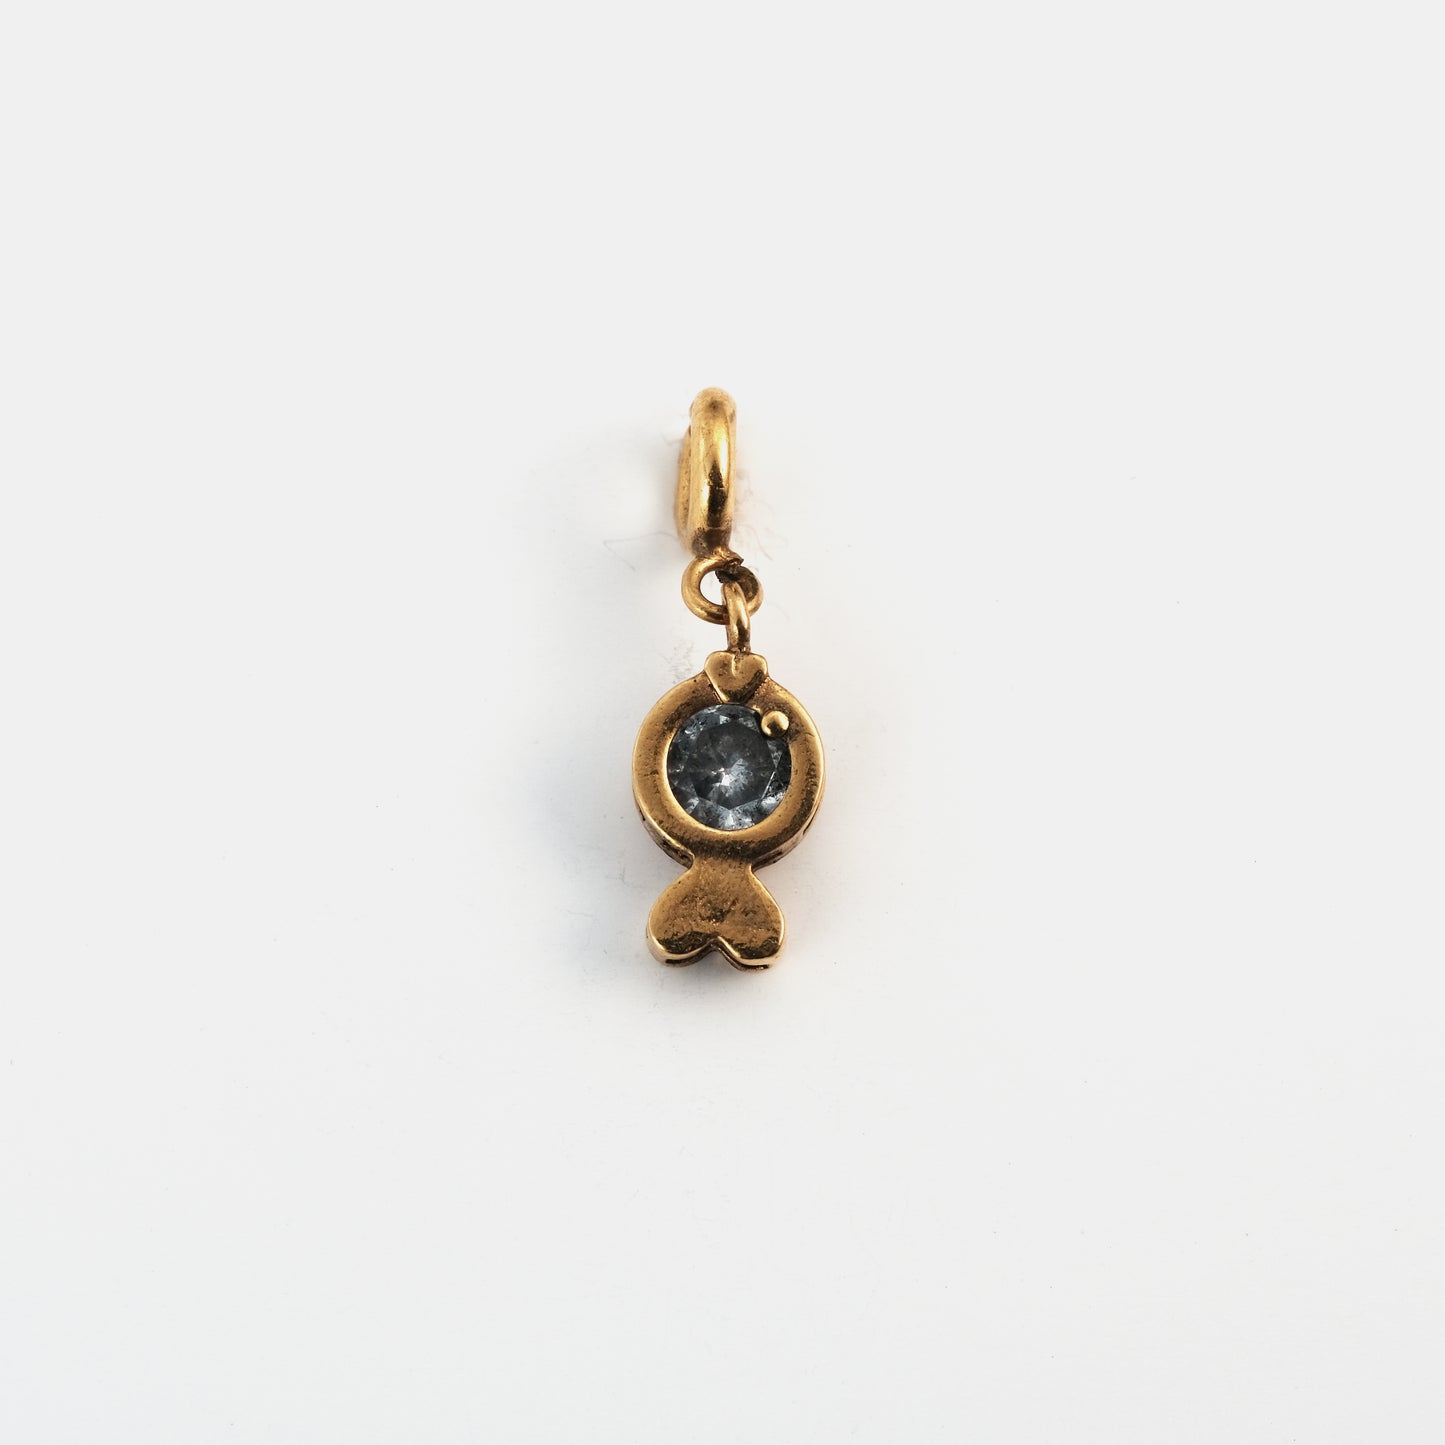 Ornate fish pendant